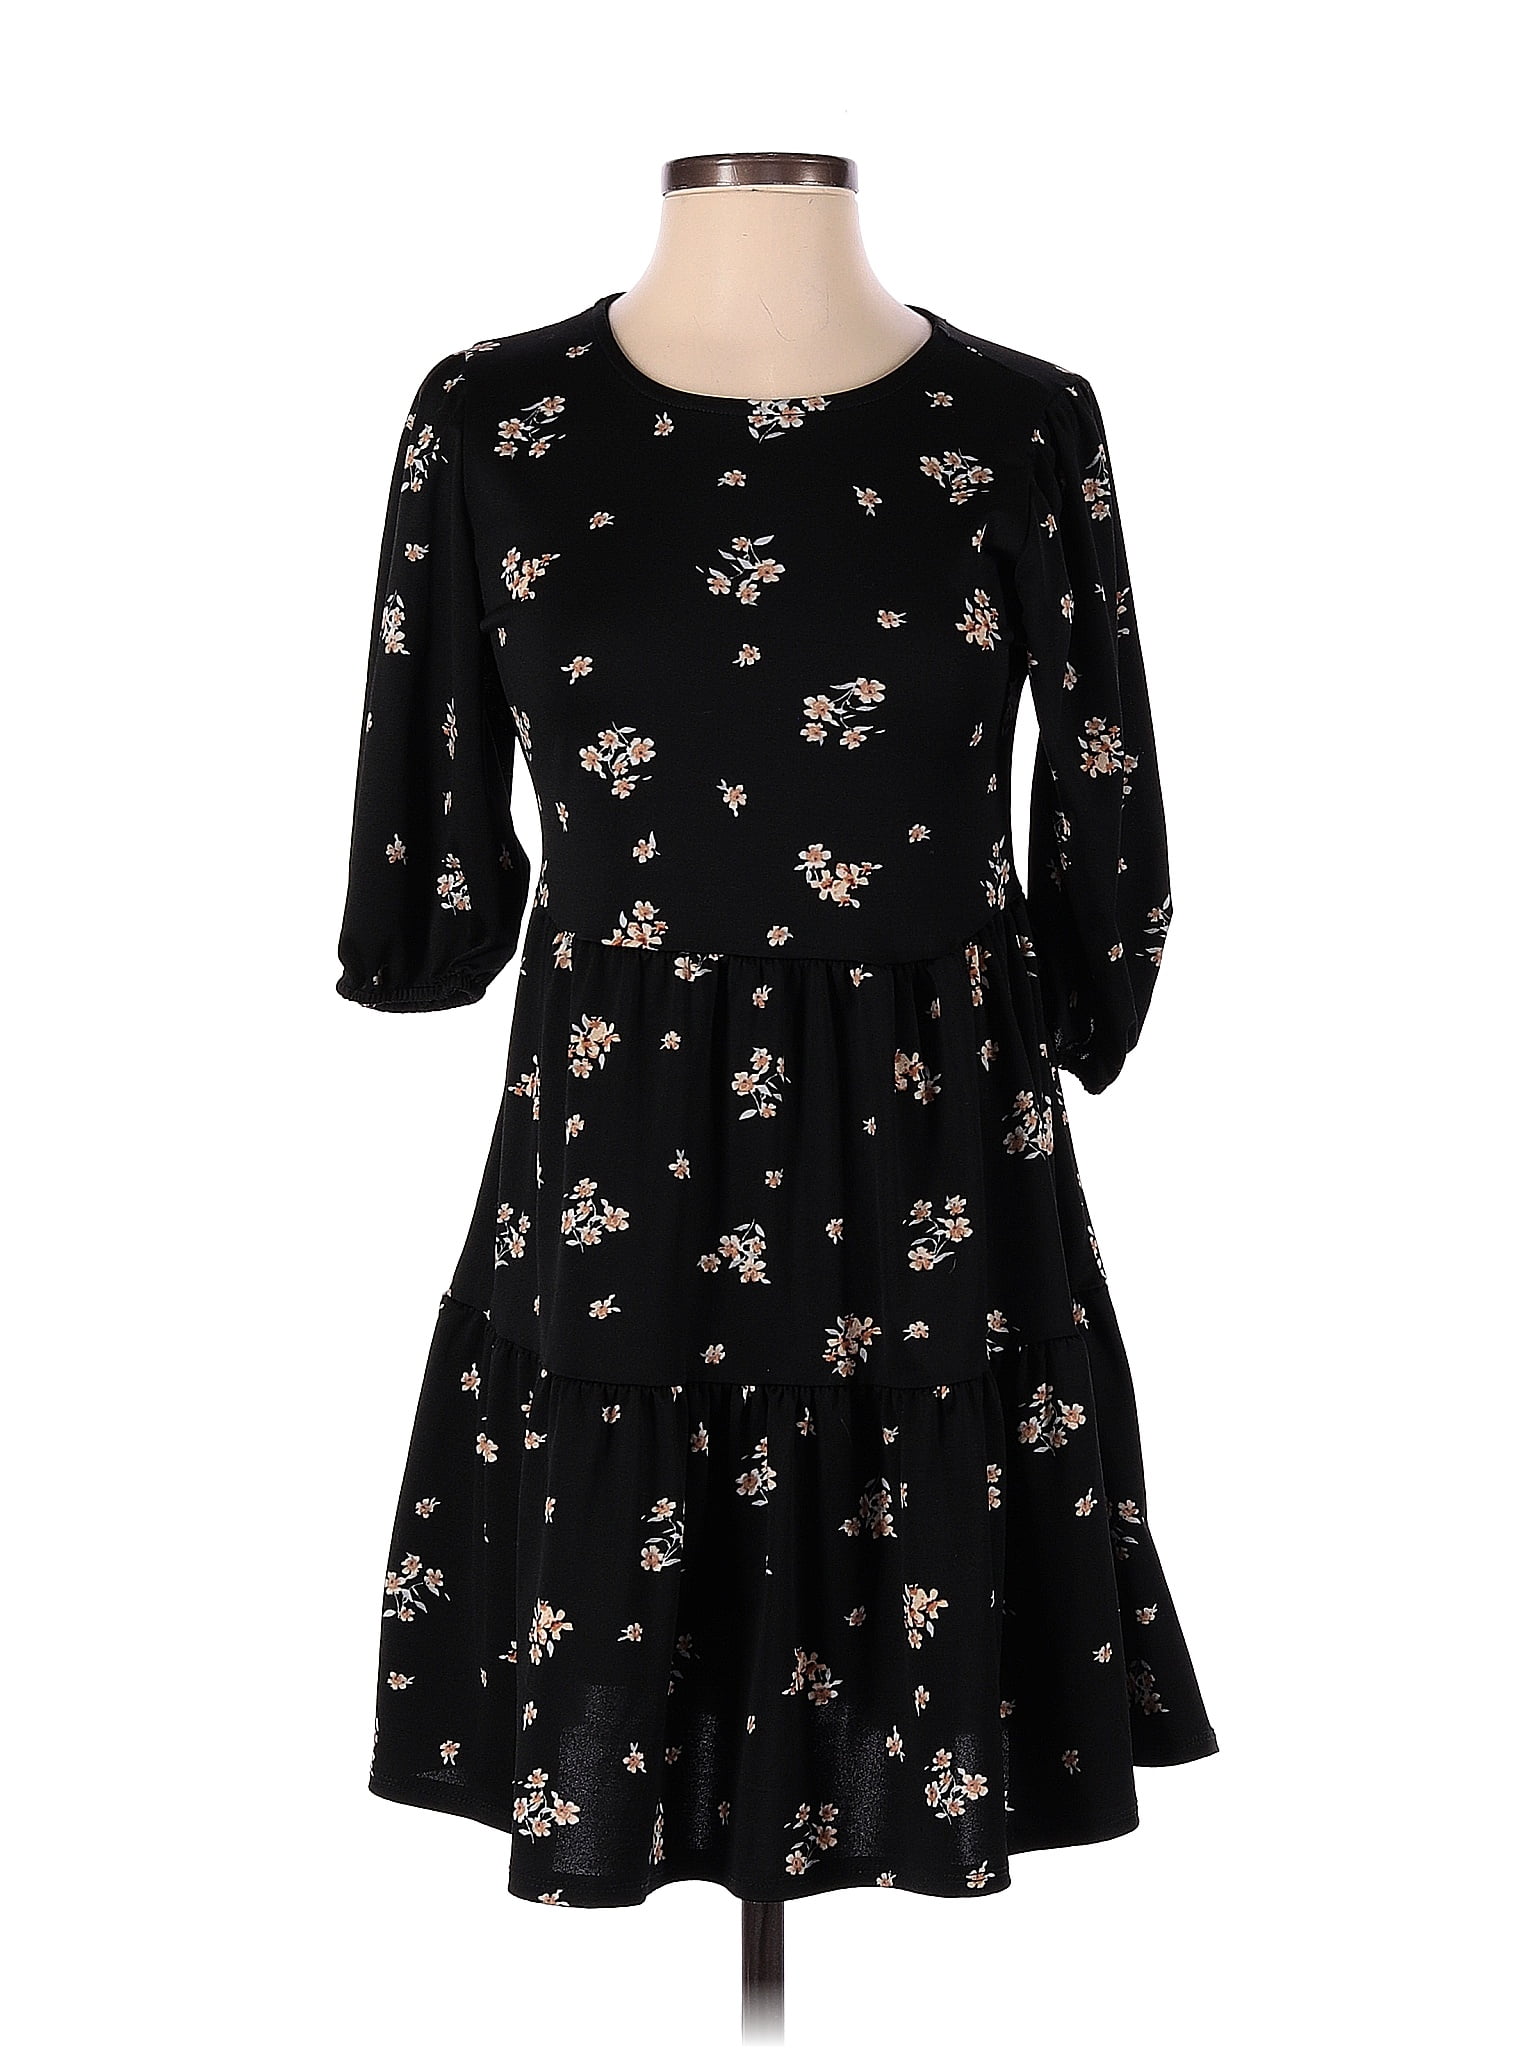 Altar'd State Floral Black Casual Dress Size S - 71% off | thredUP